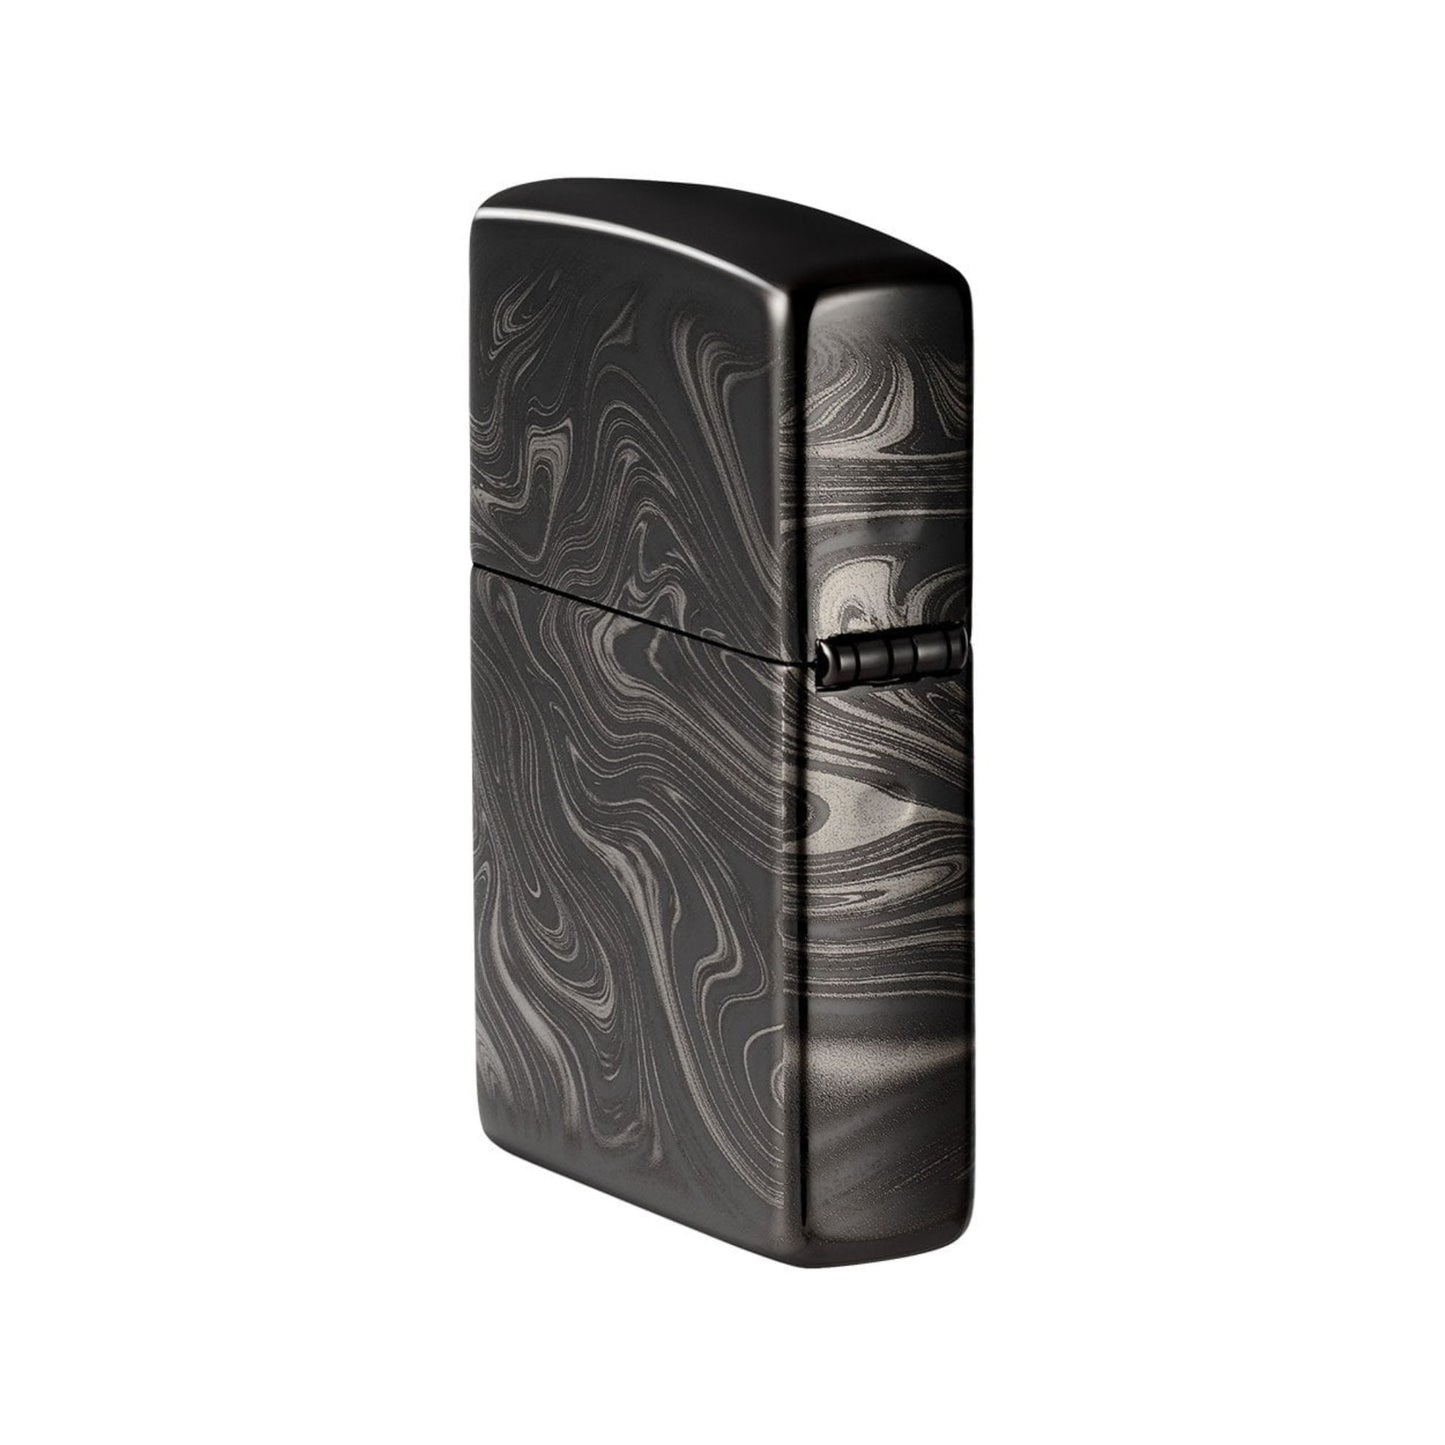 ZIPPO Marble Pattern Design Windproof Lighter